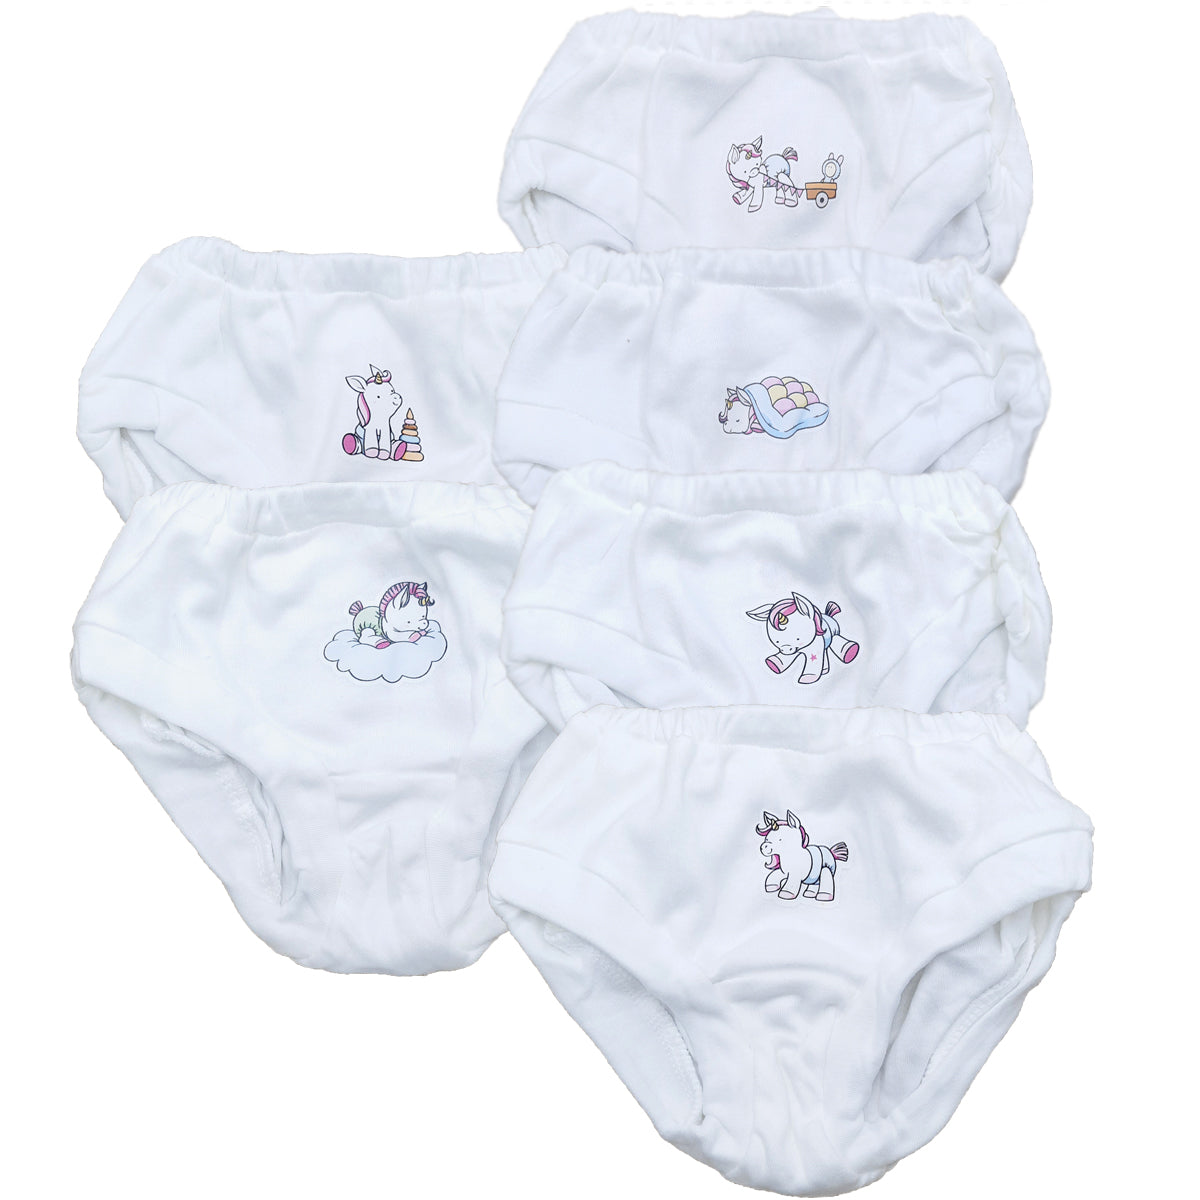 White Panties Set of 6 for Babies